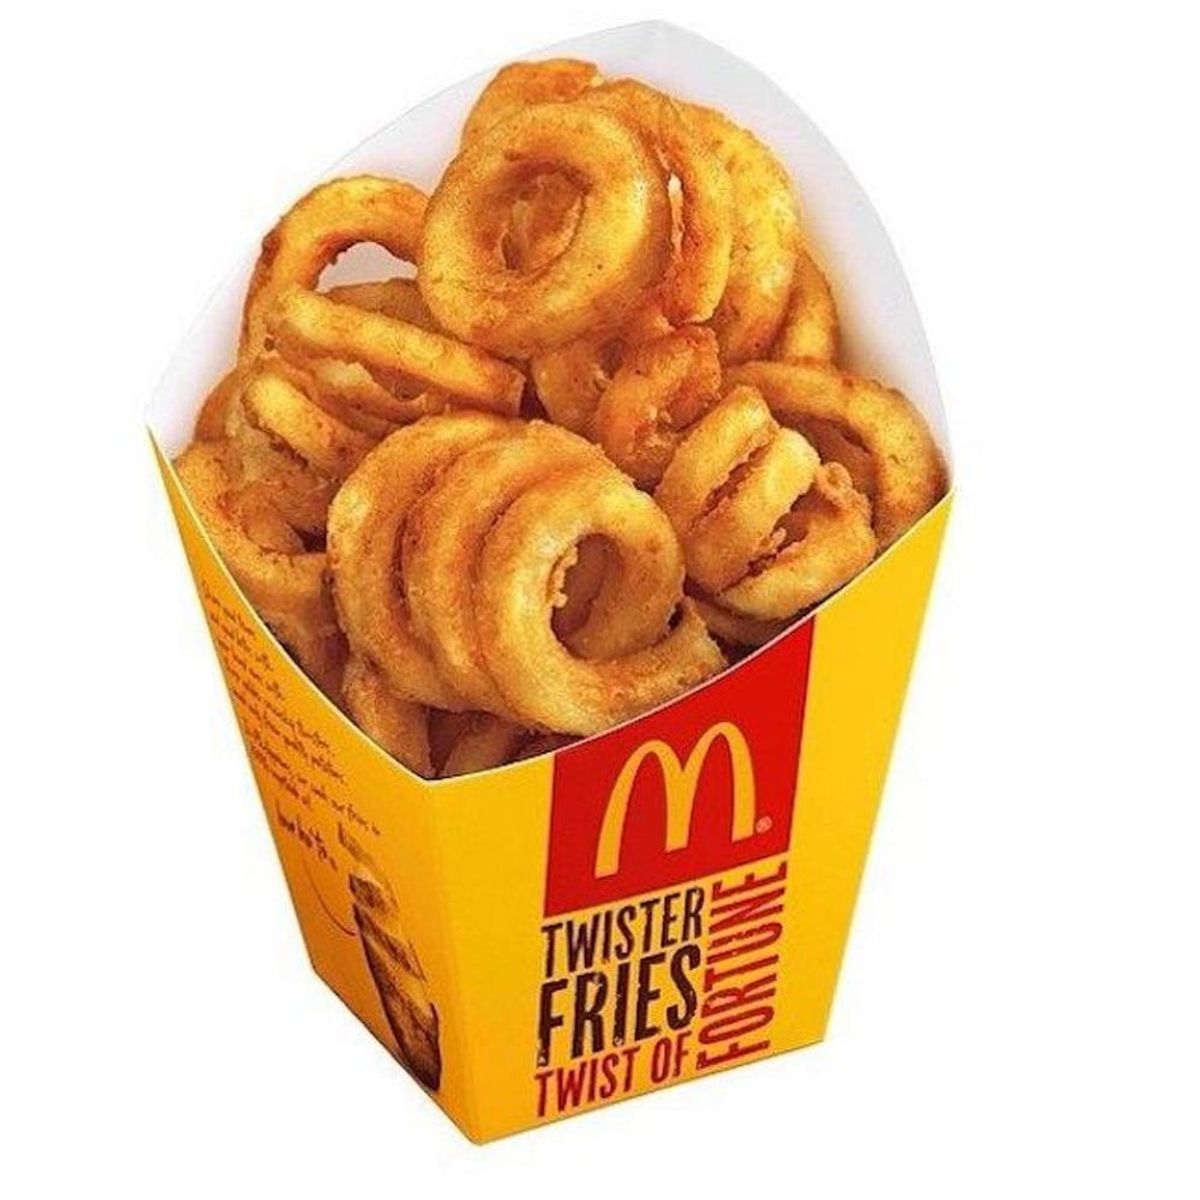 WHOA: McDonald’s Curly Fries Exist!?